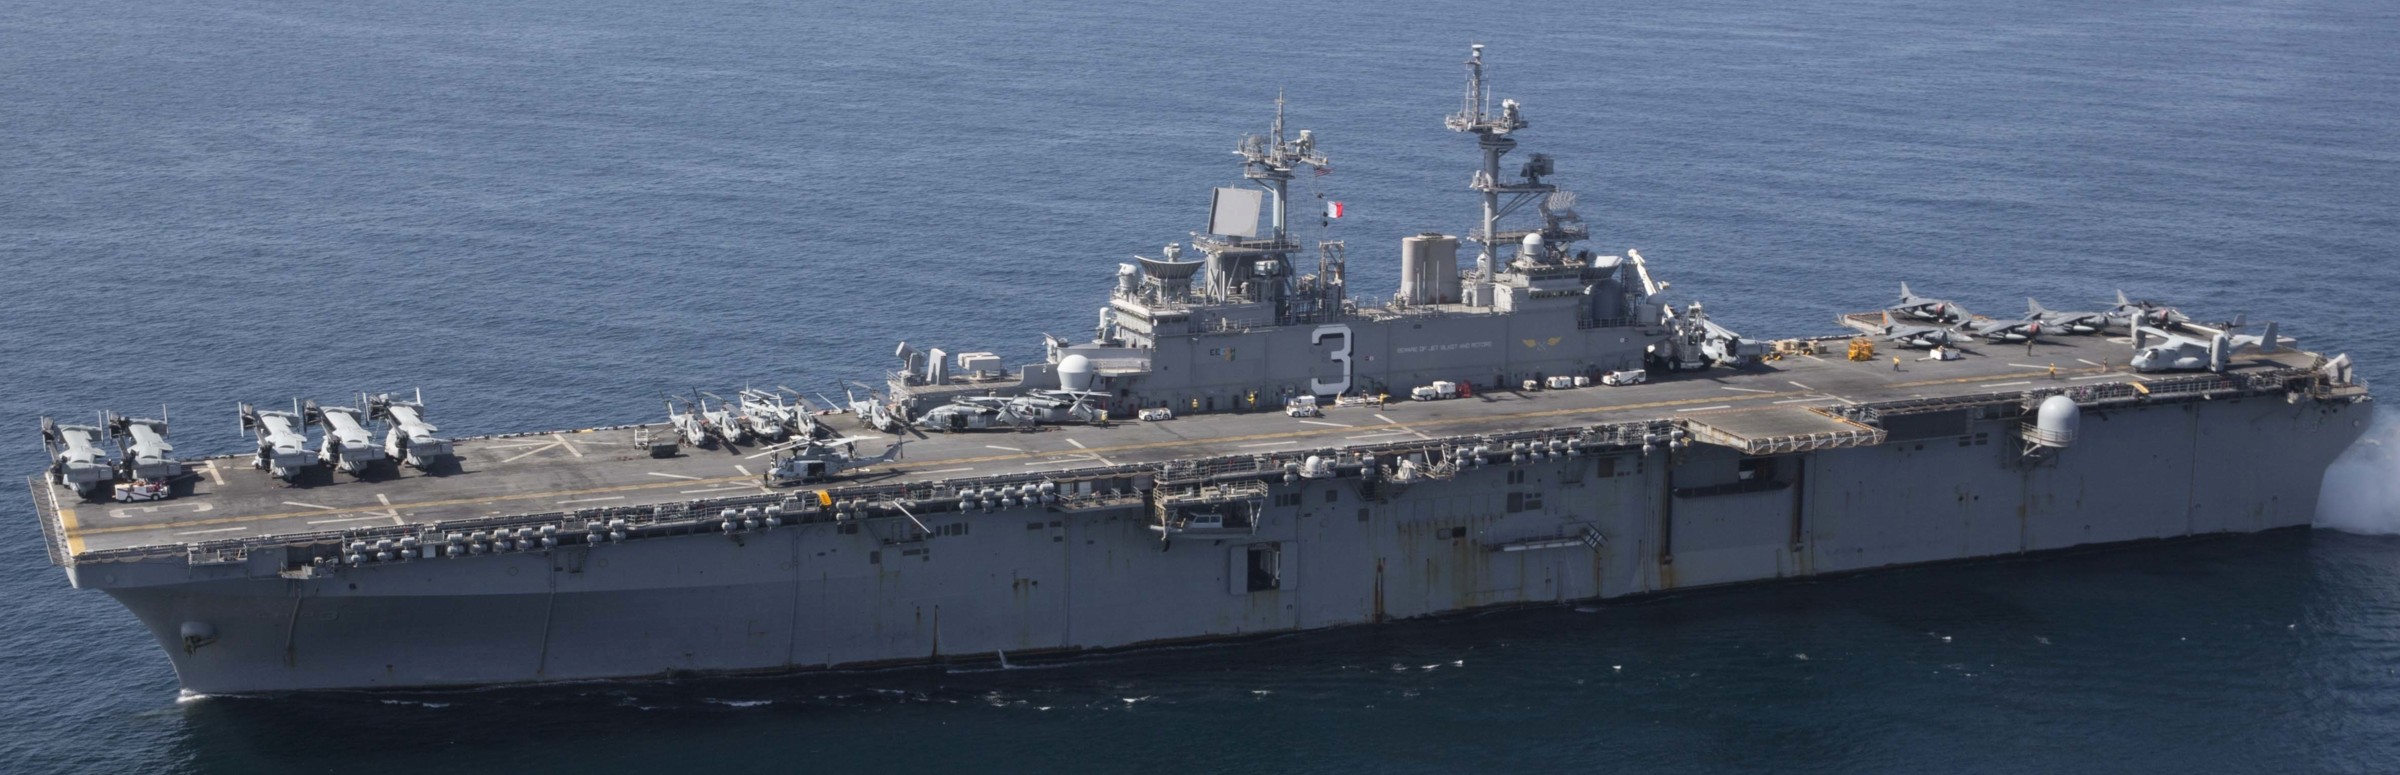 lhd-3 uss kearsarge wasp class amphibious assault ship us navy marines vmm-162 gulf of oman 164